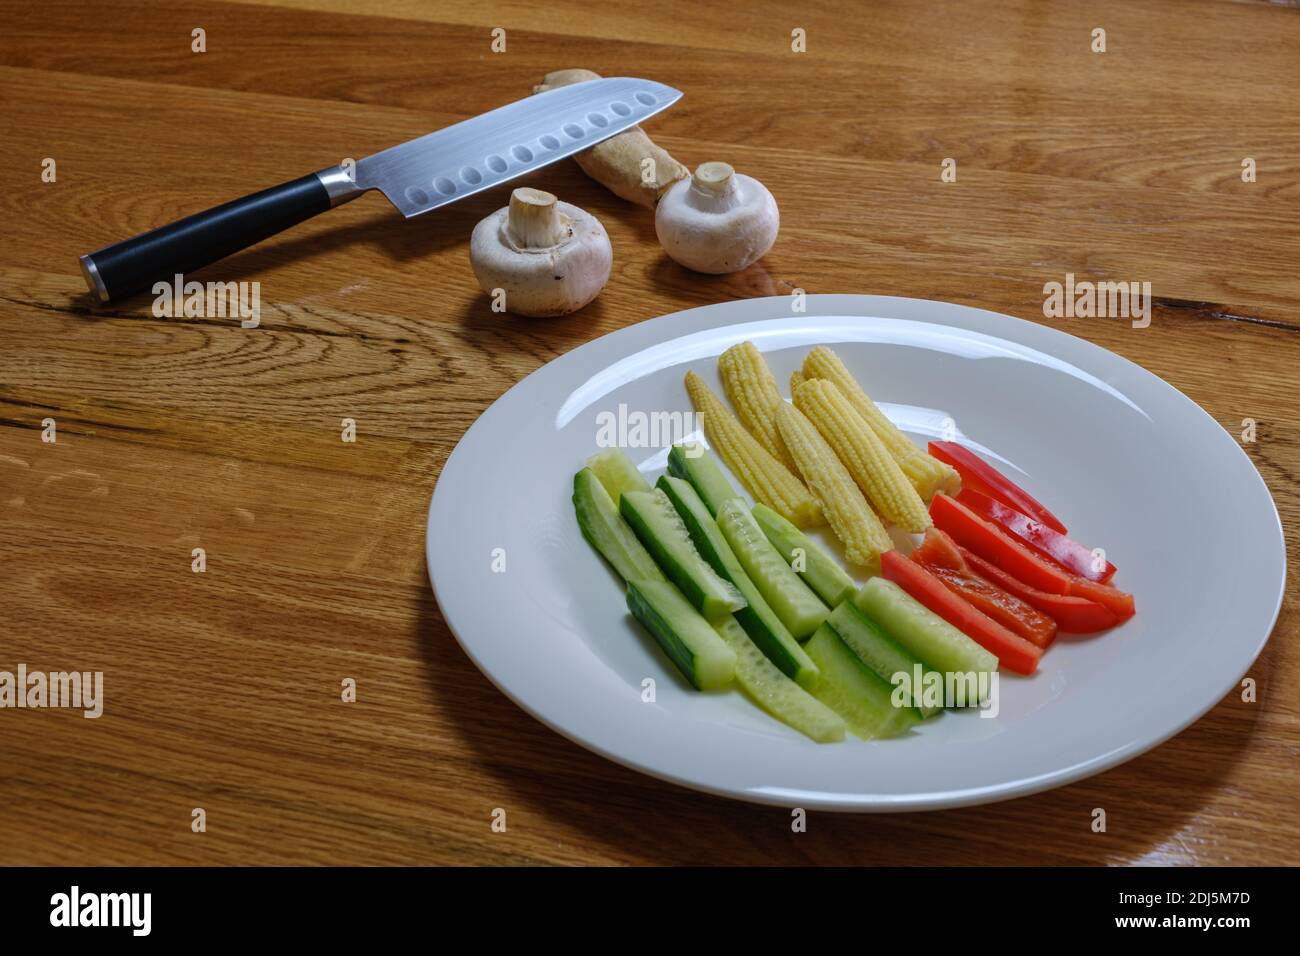 Miniature Cooking Real Santoku Knife : cut real tiny edible food